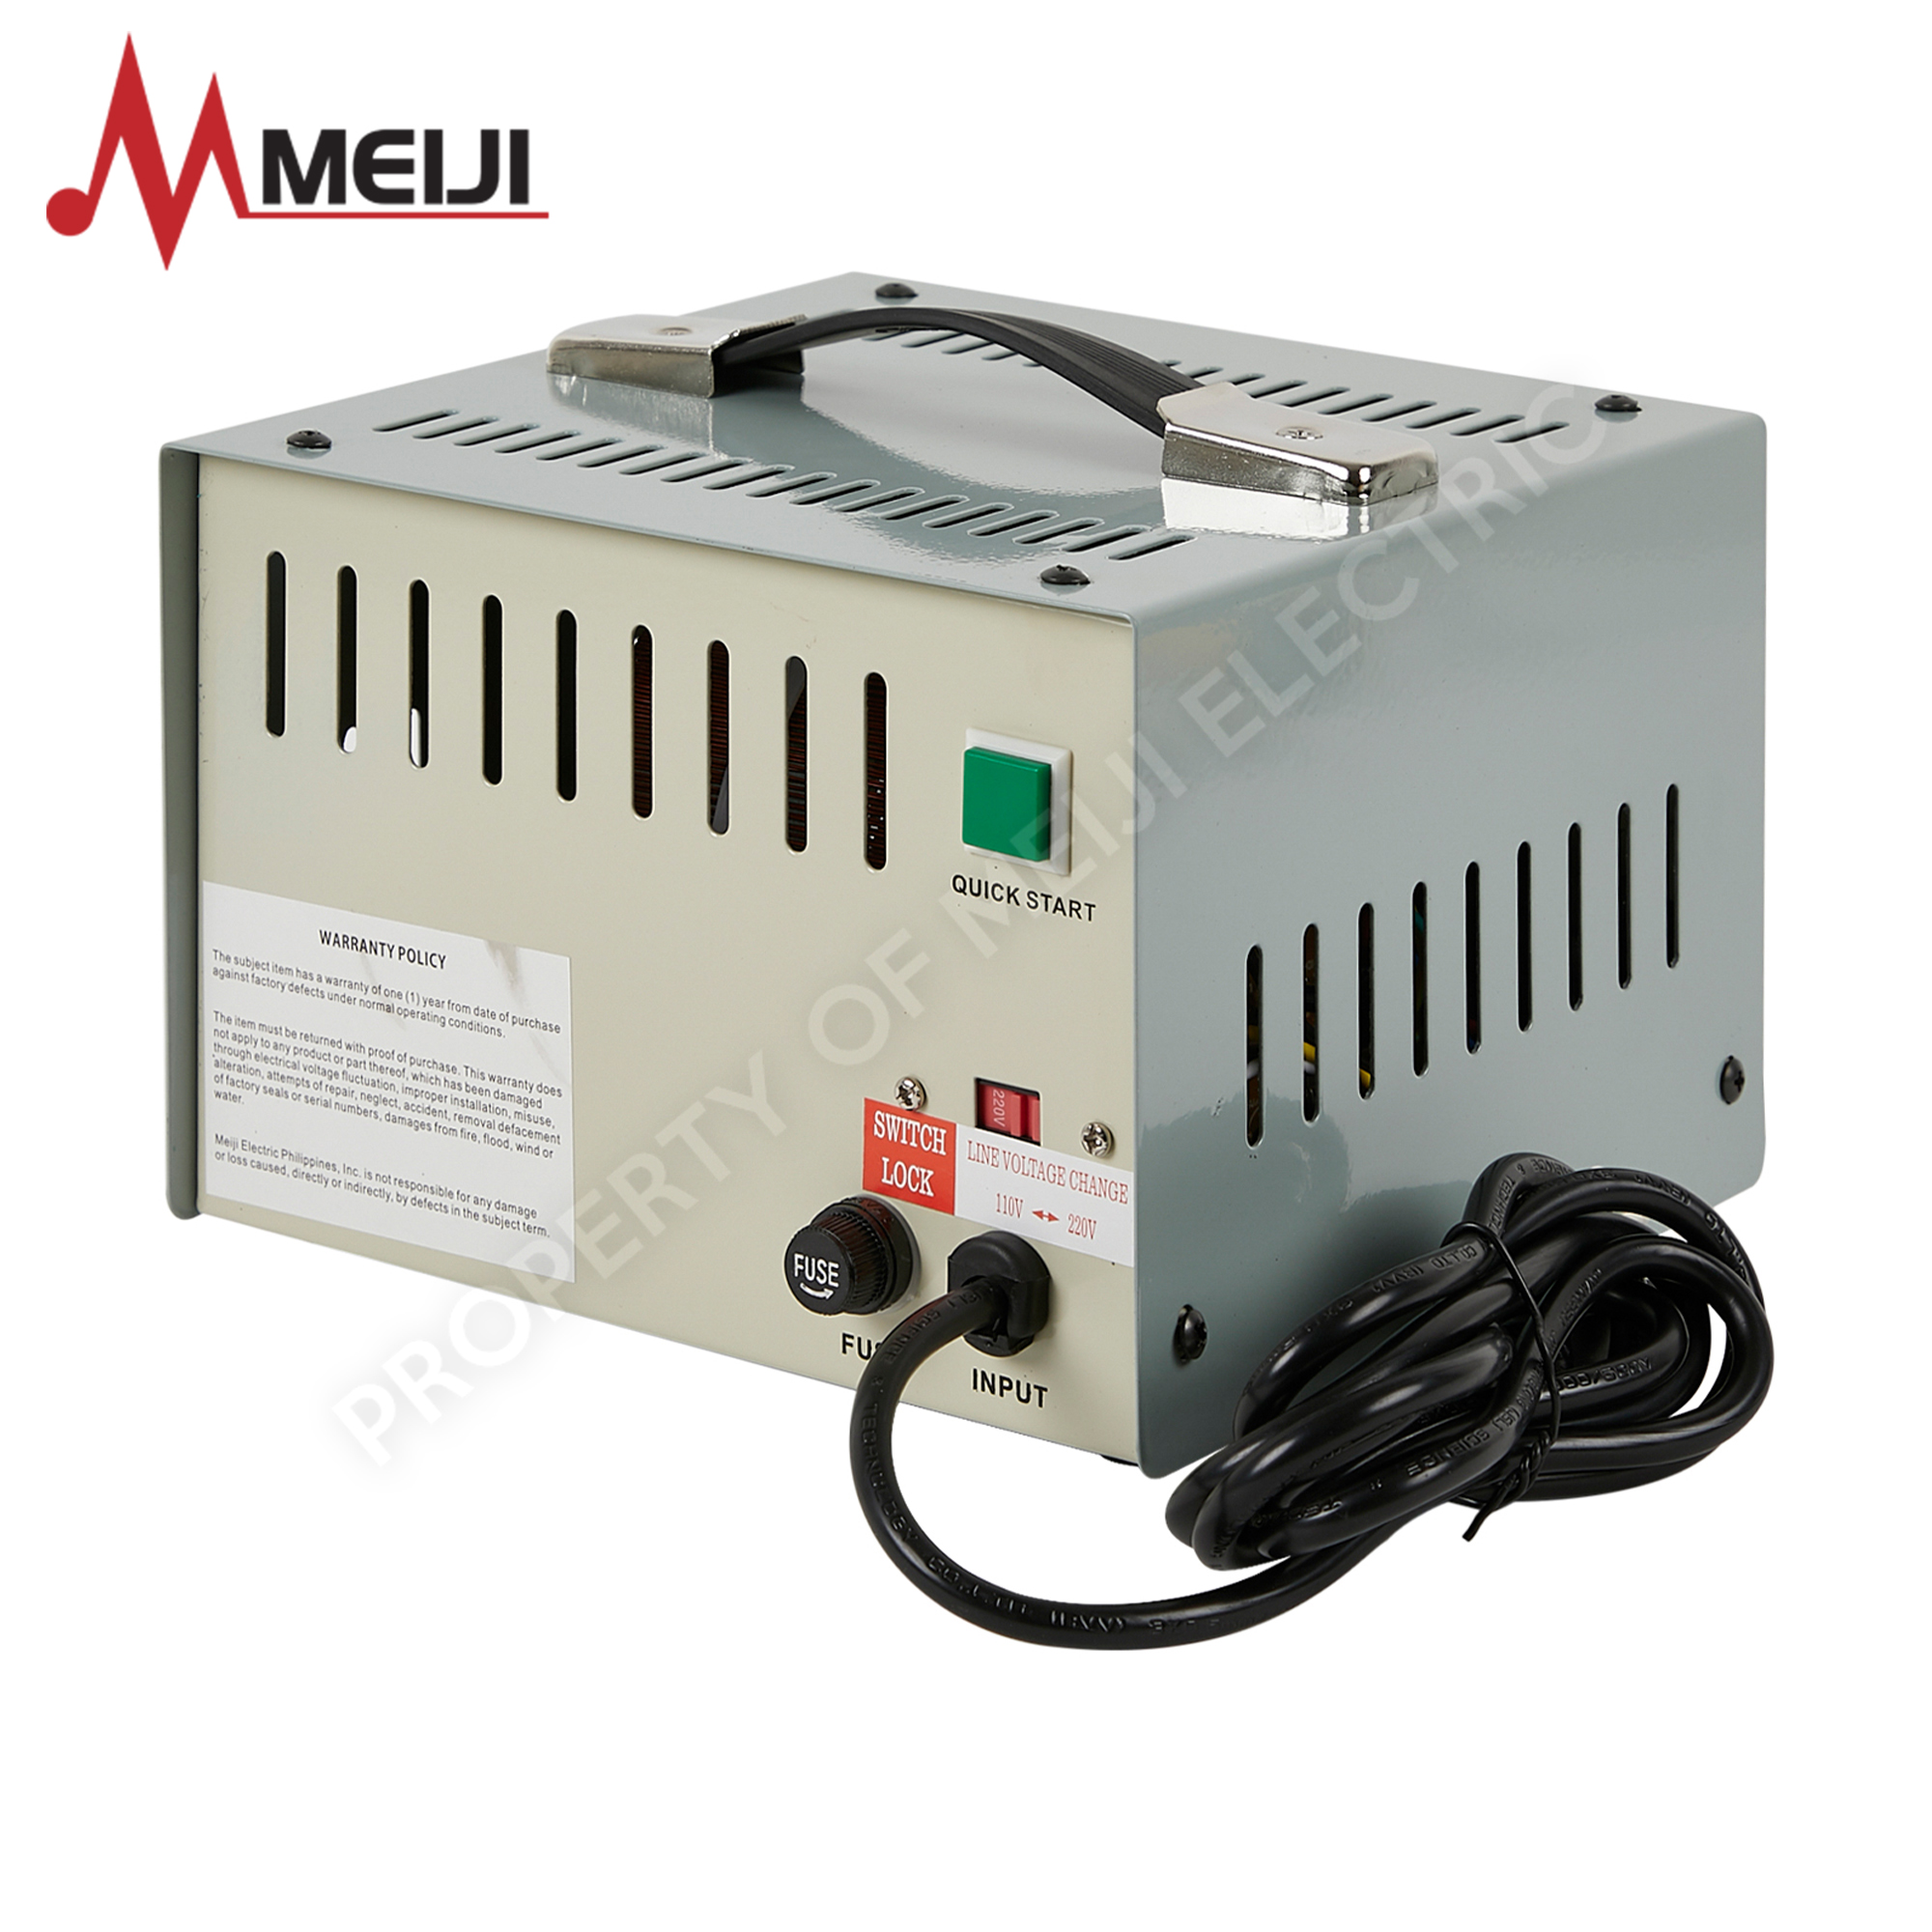 Meiji Automatic Voltage Regulator 10,000W - SVC-100000 - Meiji